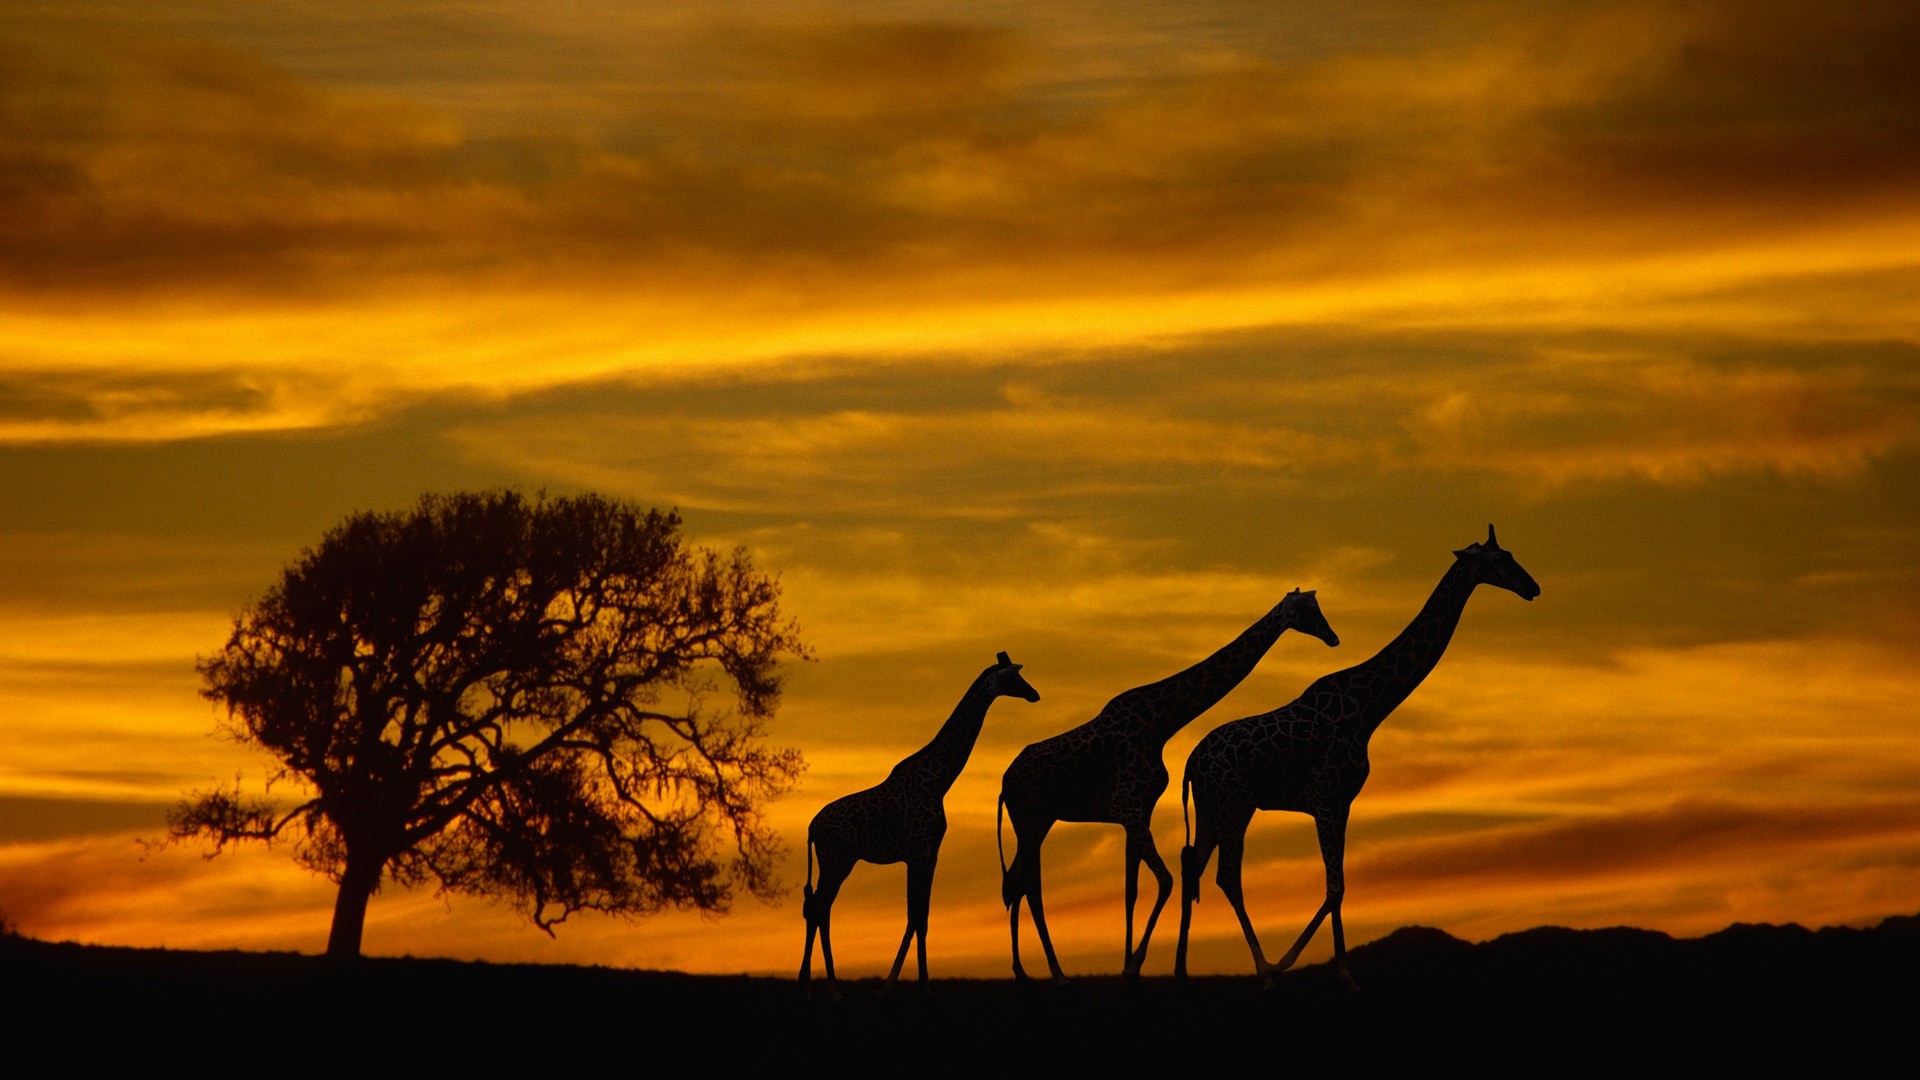 Africa, Giraffes, Animals, Wildlife, Sunset, Silhouette, Clouds, Sky